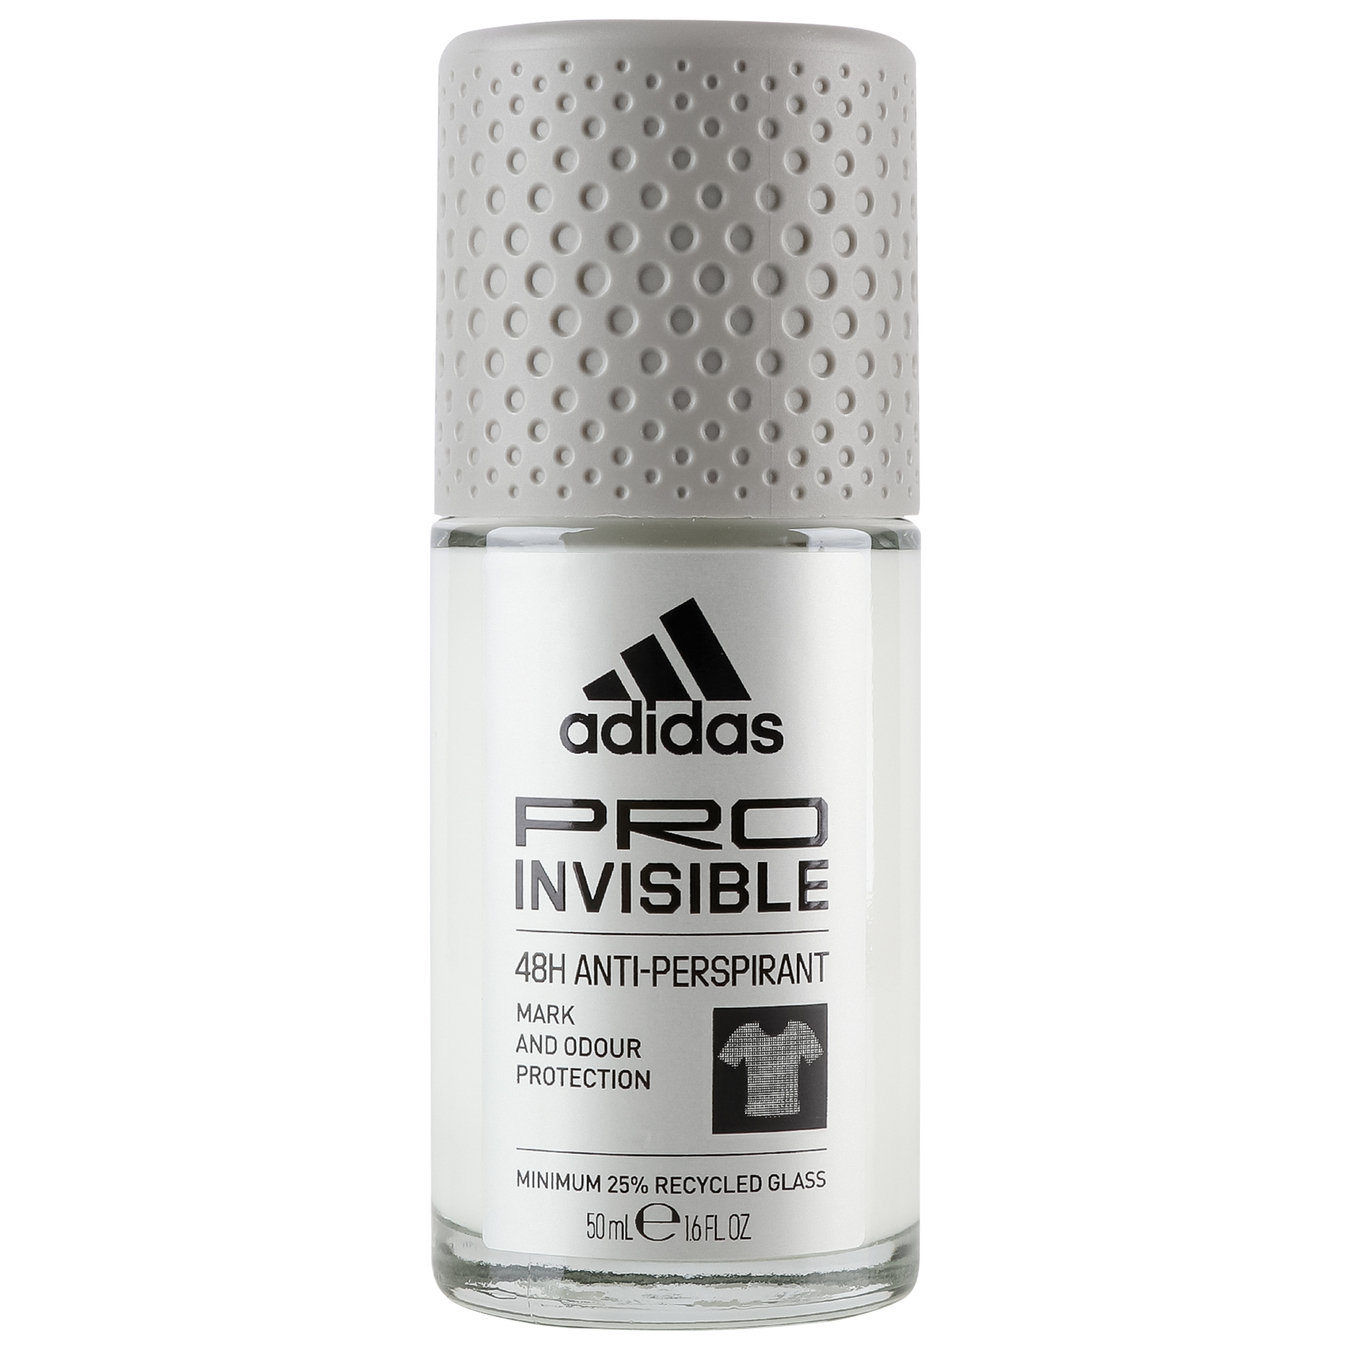 Adidas Invisible Pro ball deodorant 50ml